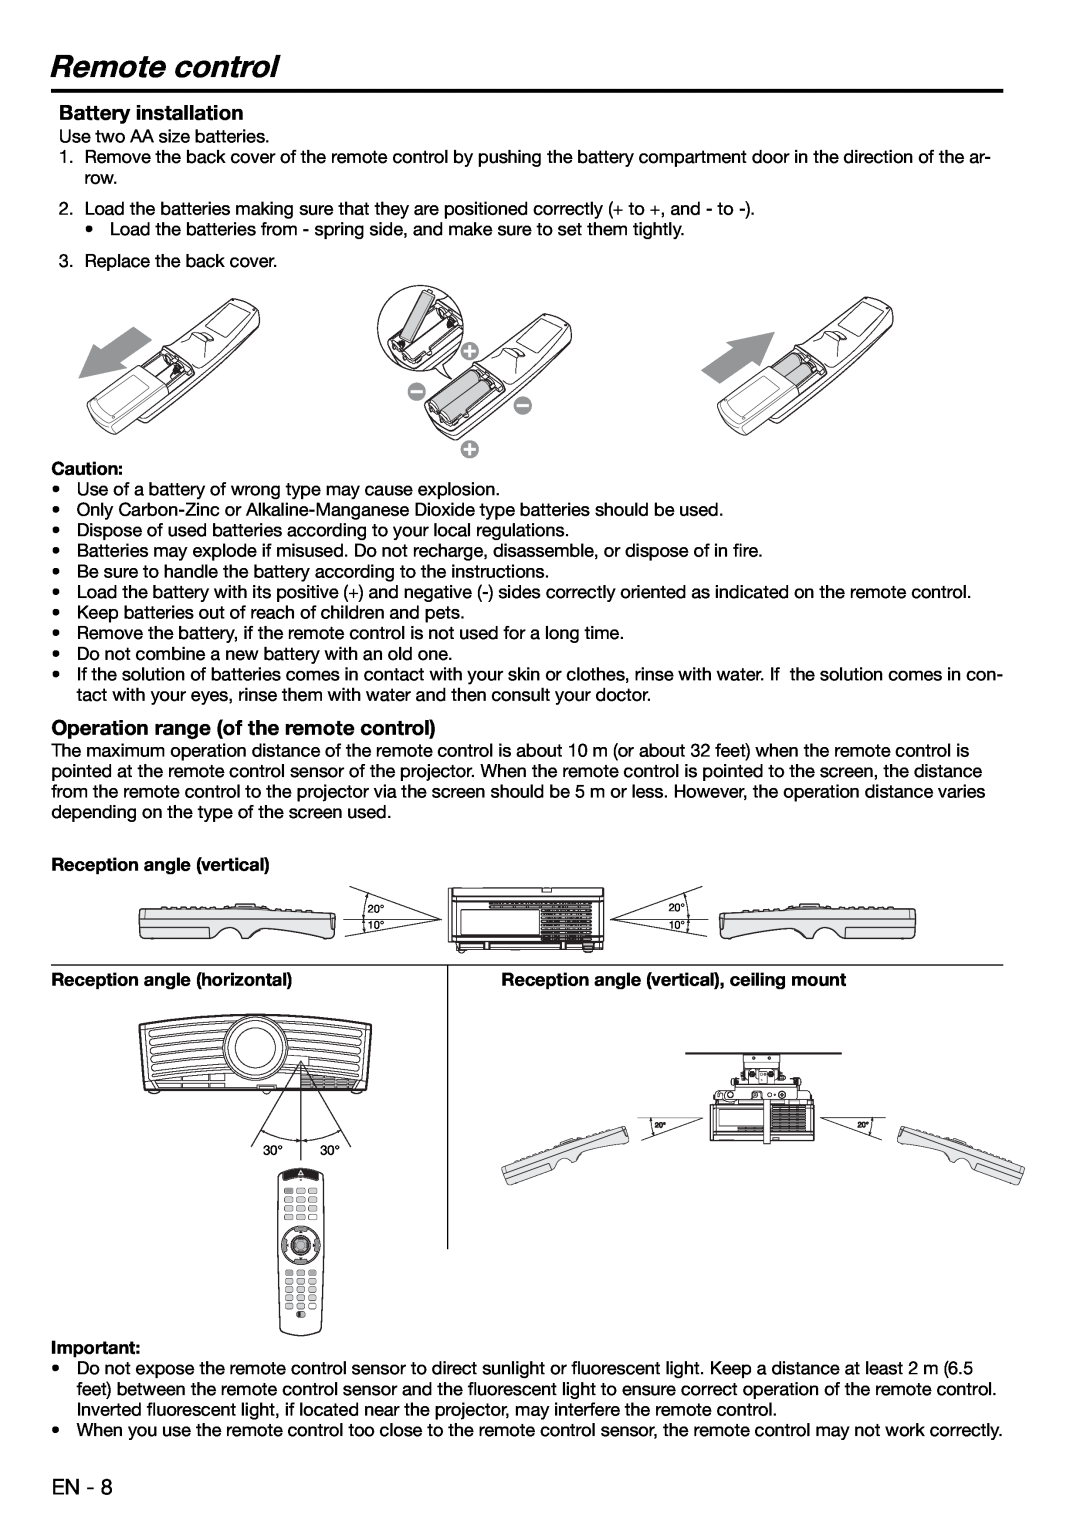 Mitsubishi Electronics XD480U user manual Remote control, Battery installation, Operation range of the remote control 